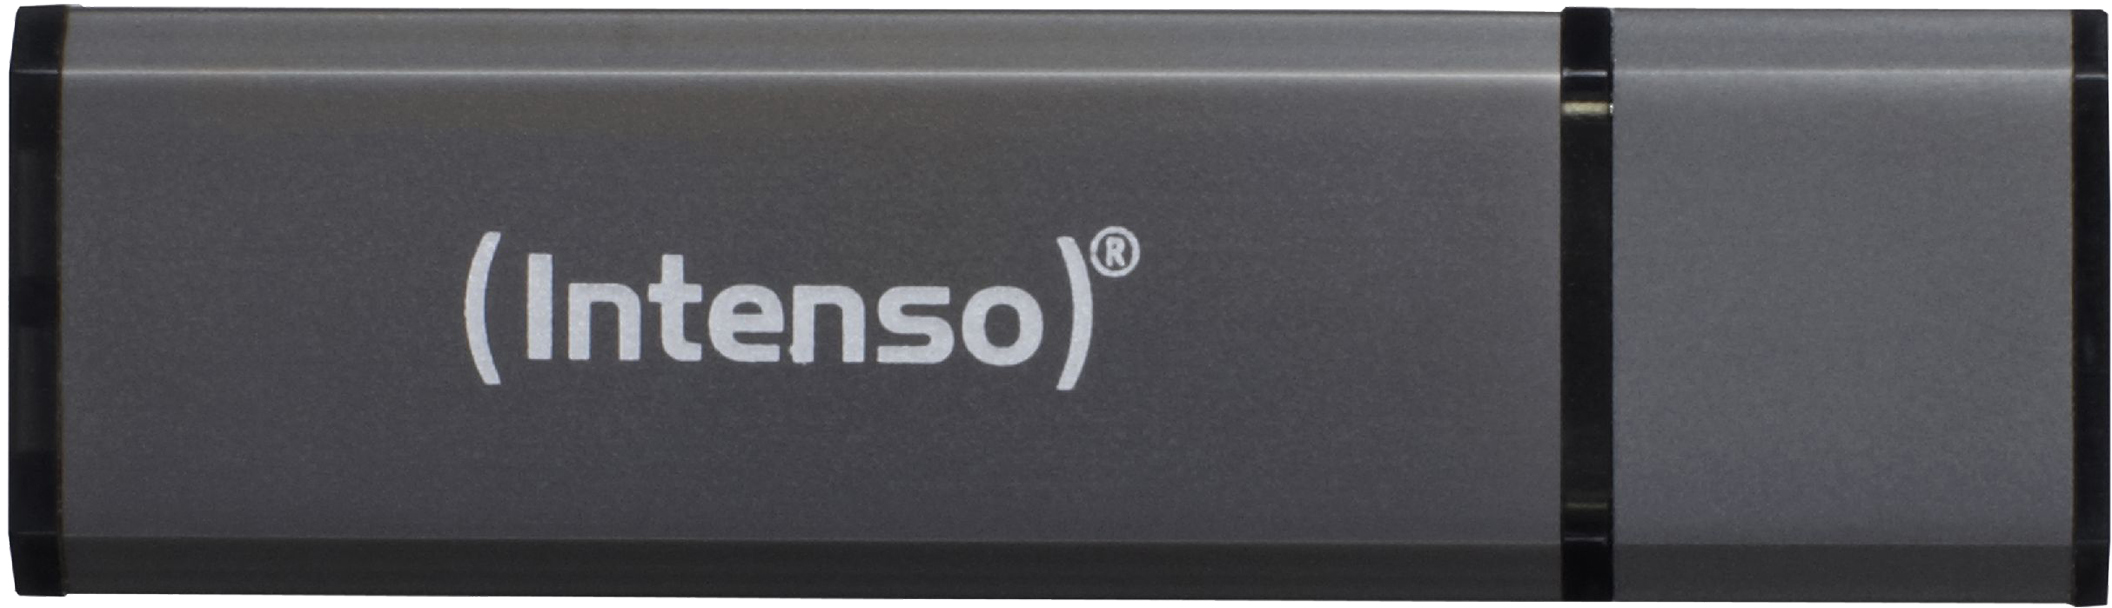 INTENSO GB, Anthrazit MB/s, 28 8 Line USB-Stick, Alu